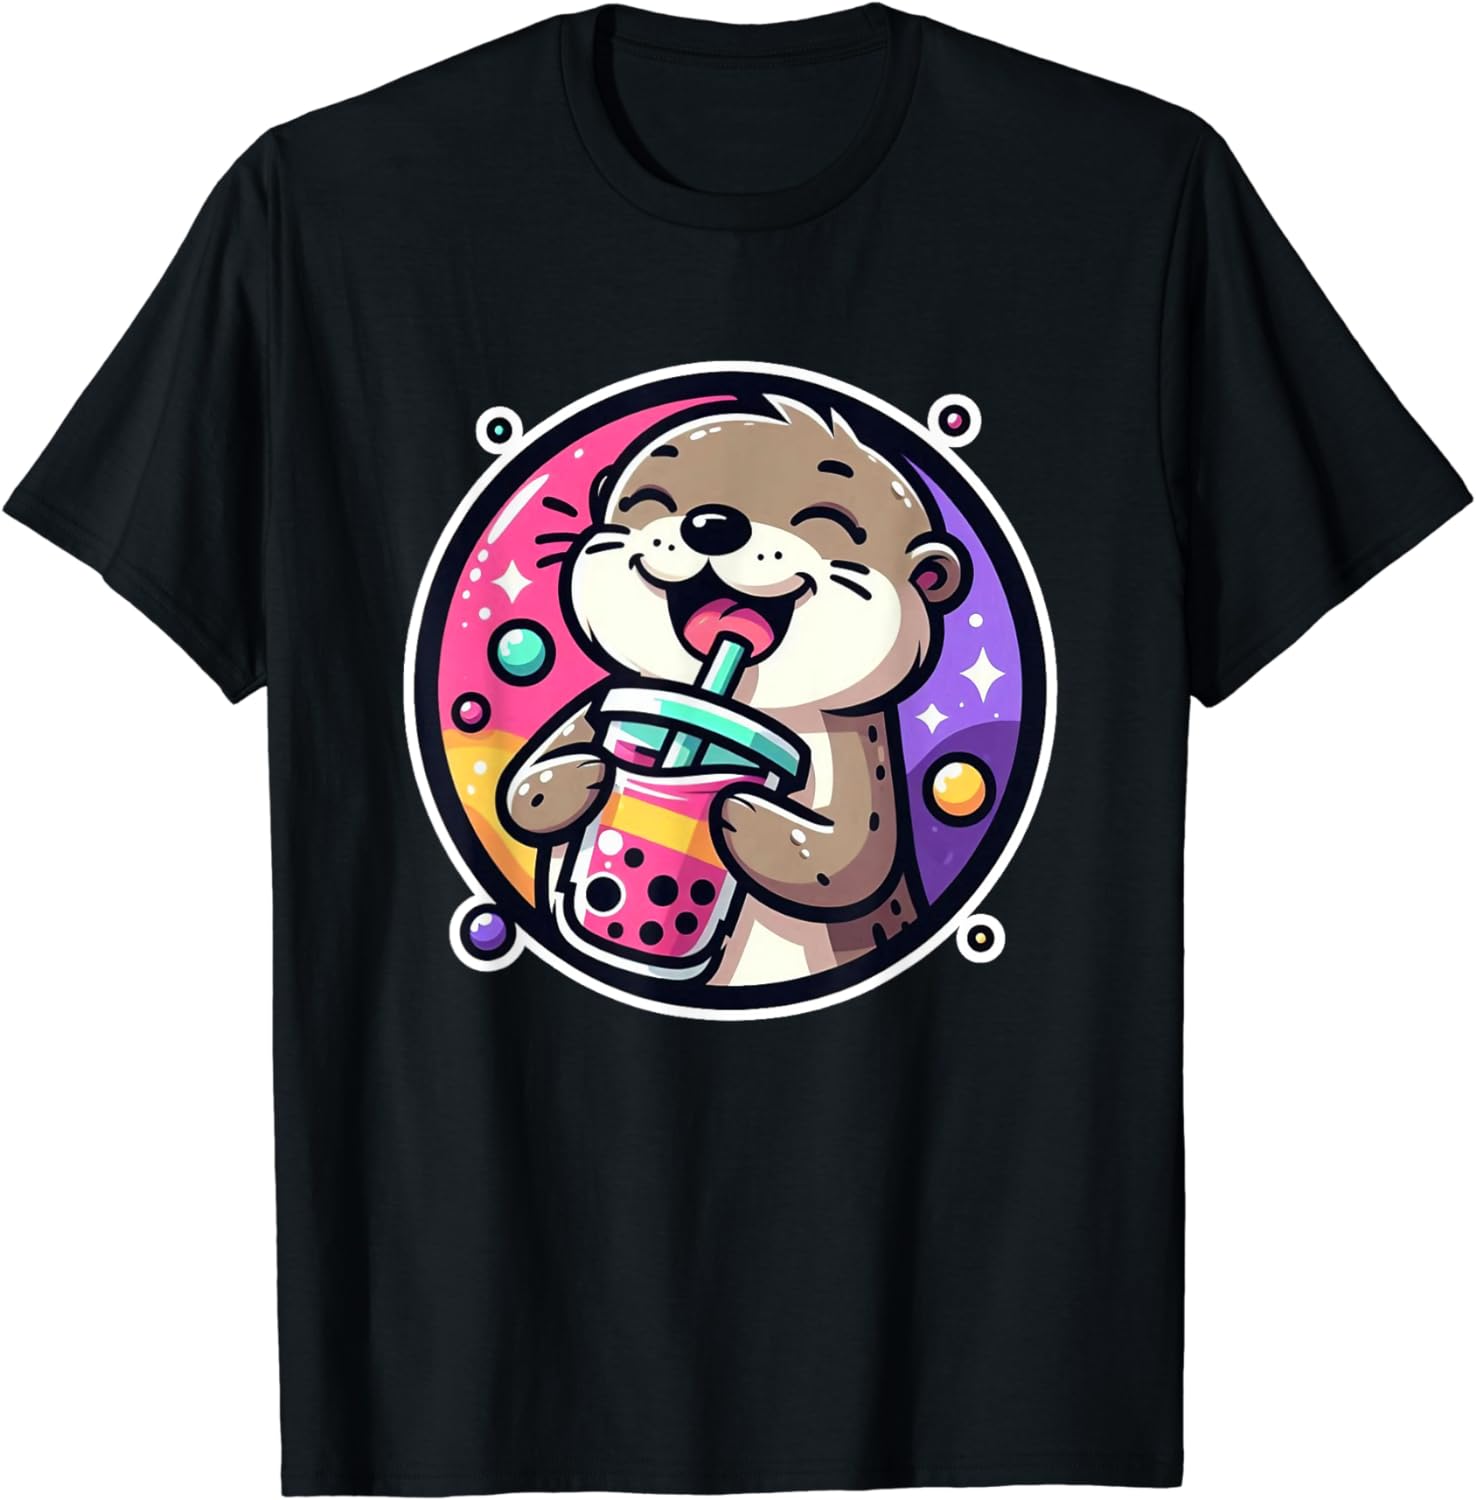 Otter Bubble Tea Shirt